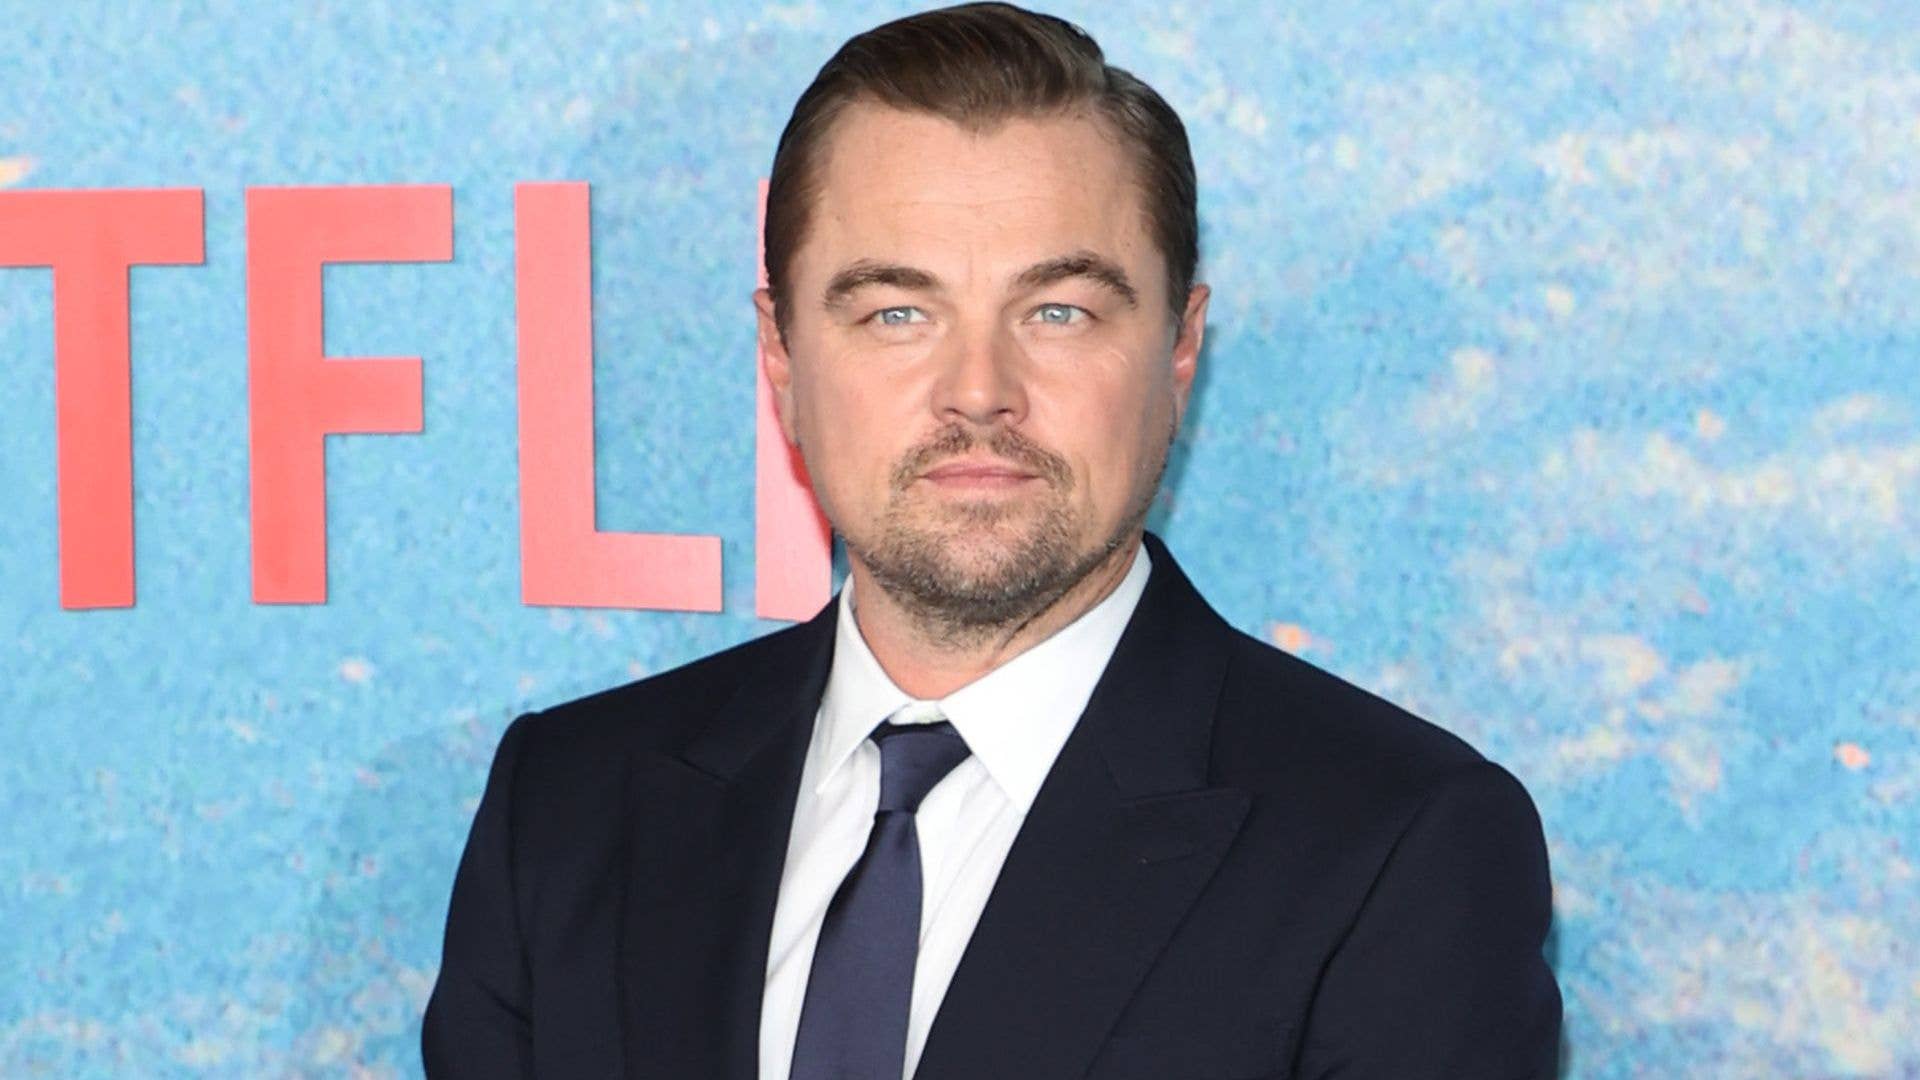 Leonardo DiCaprio attends Netflix's "Don't Look Up" World Premiere